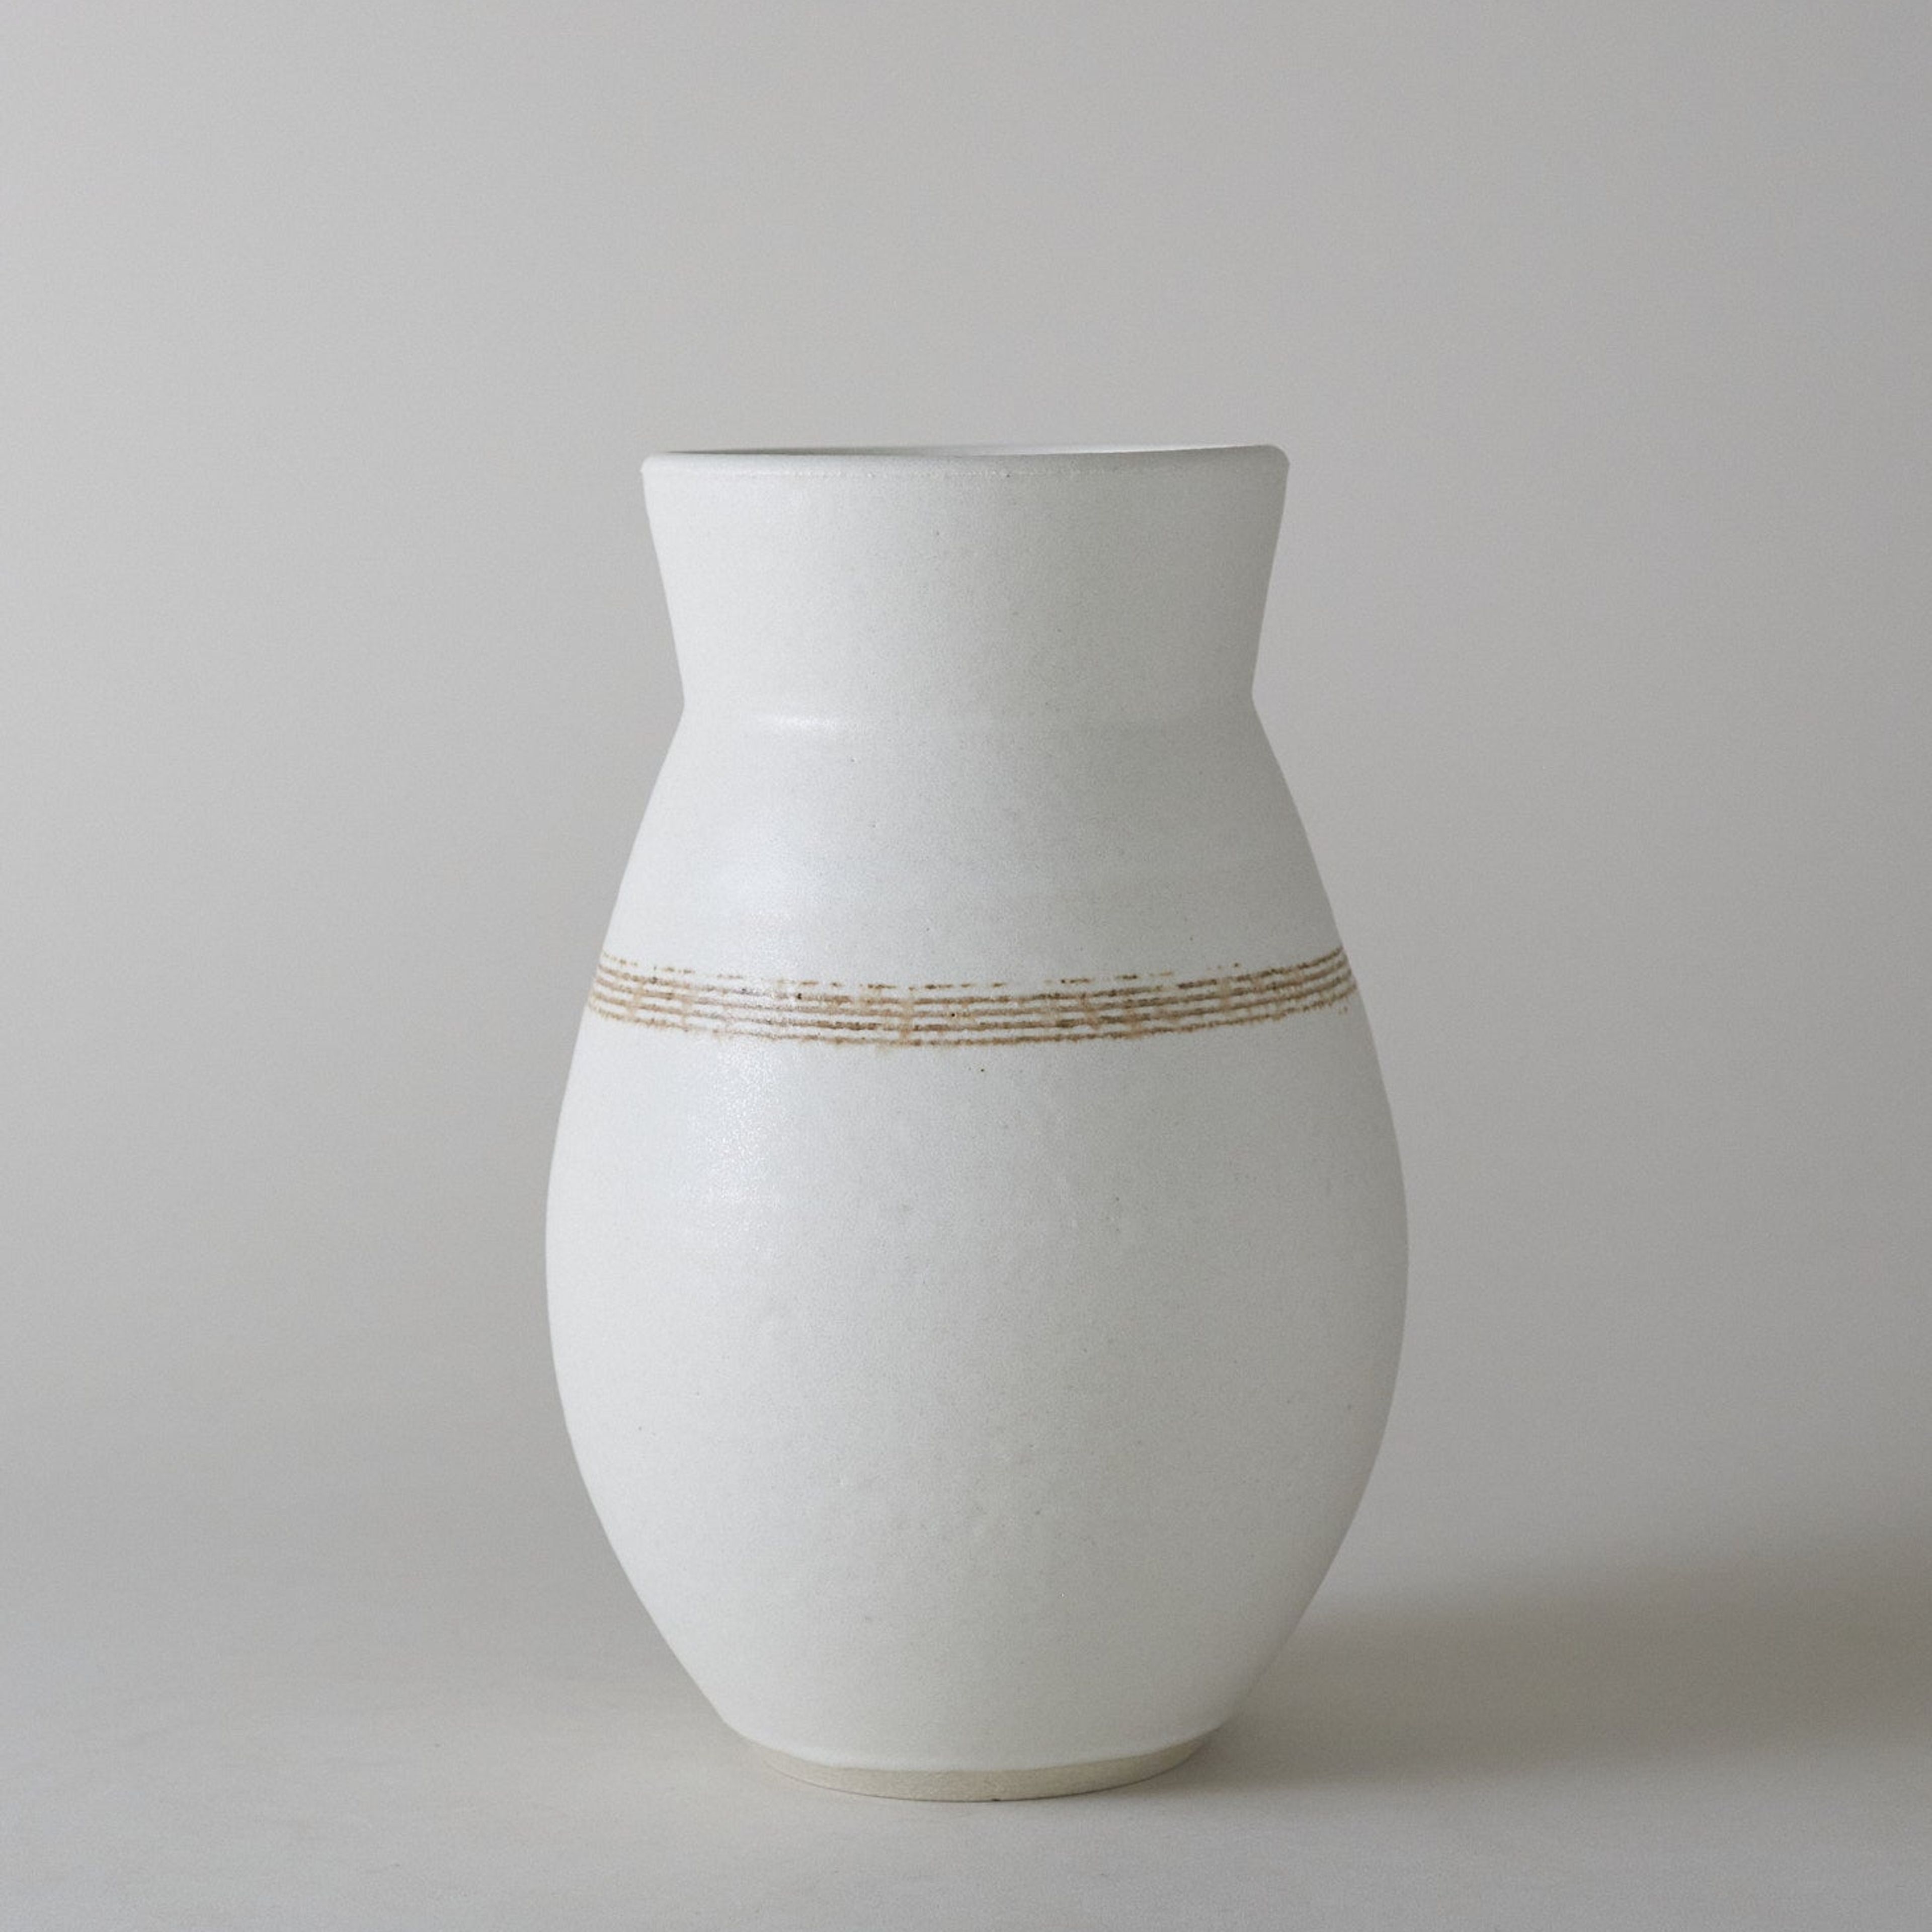 Deco Series Vase in Inlaid Birch